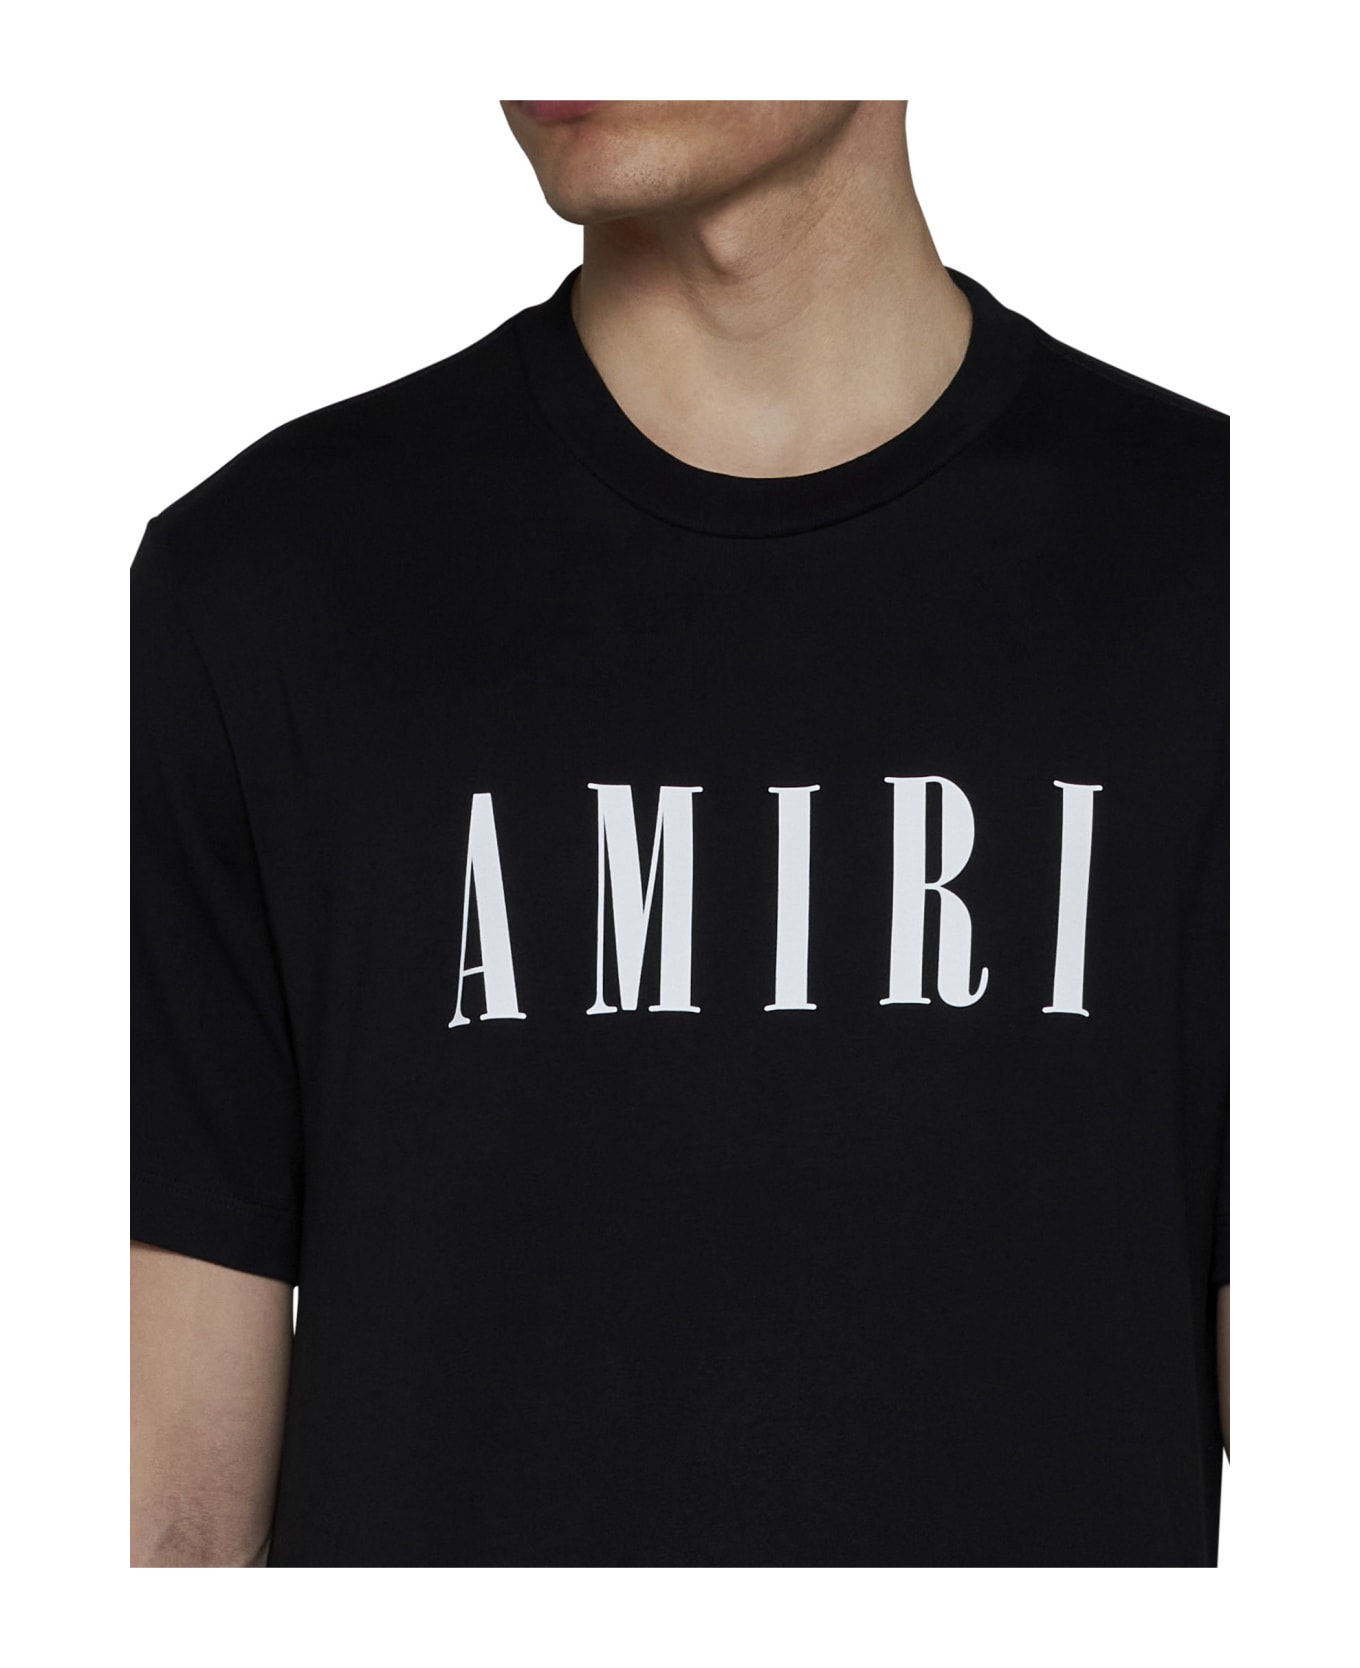 AMIRI T-Shirt - Black